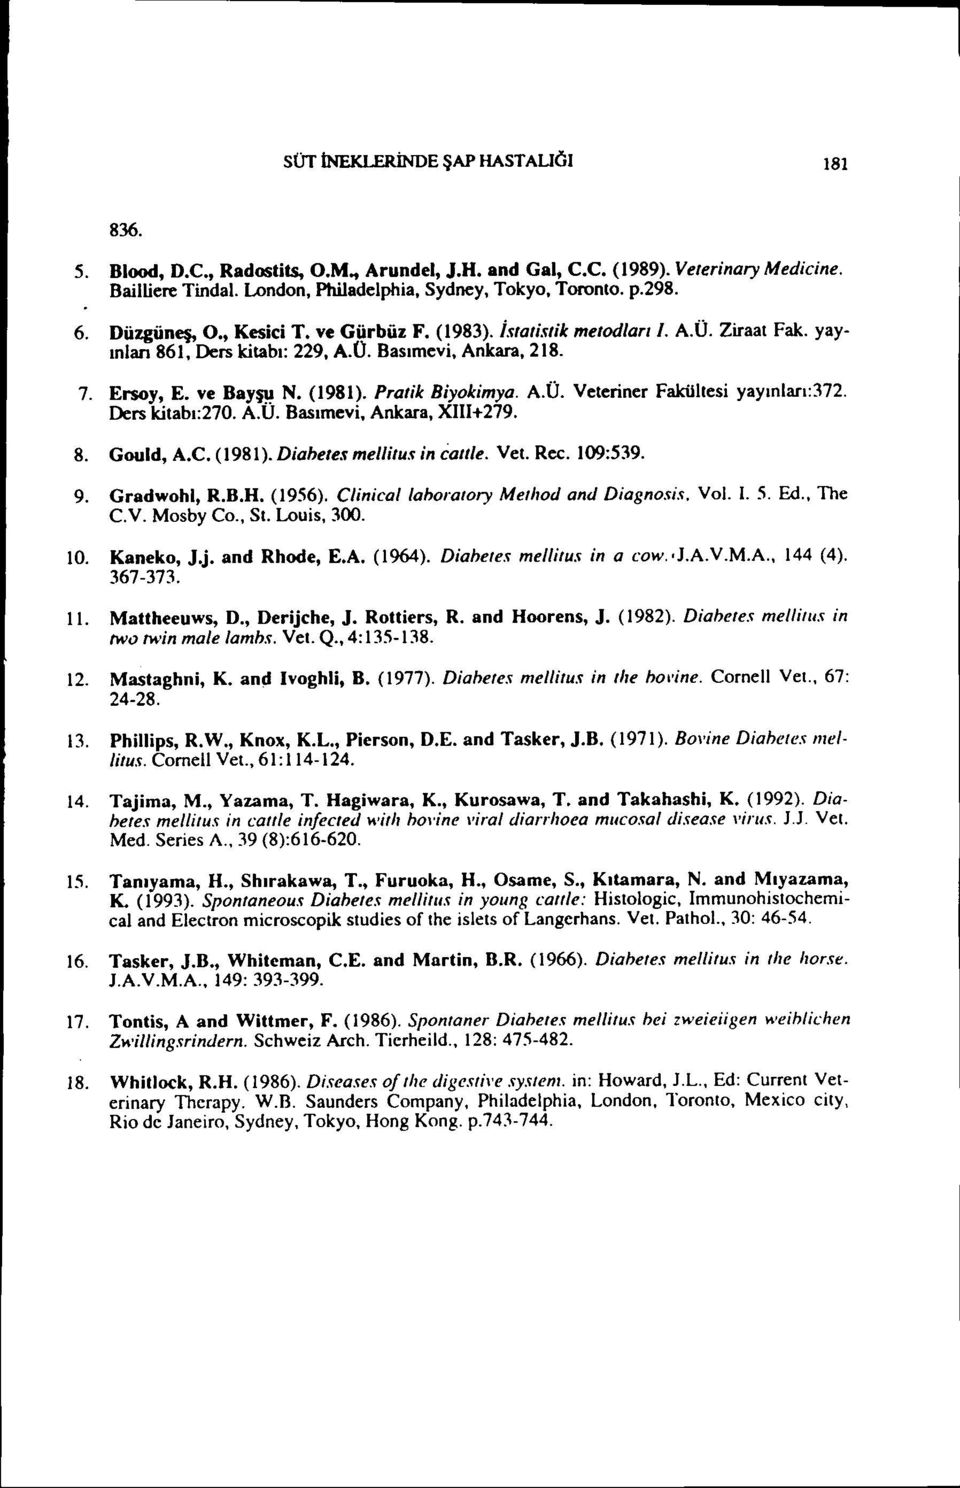 Ders ktabı:270. A.U. Basımev, Ankara, XILI+279. 8. Gould, A.C. (1981). Dahetes melltus n ca((le. Vel. Rec. 109:539. 9. Gradwohl, R.B.H. (1956). Clncallahol'a/ory Me/hod and Dagnoss. Vol.. 5. Ed.